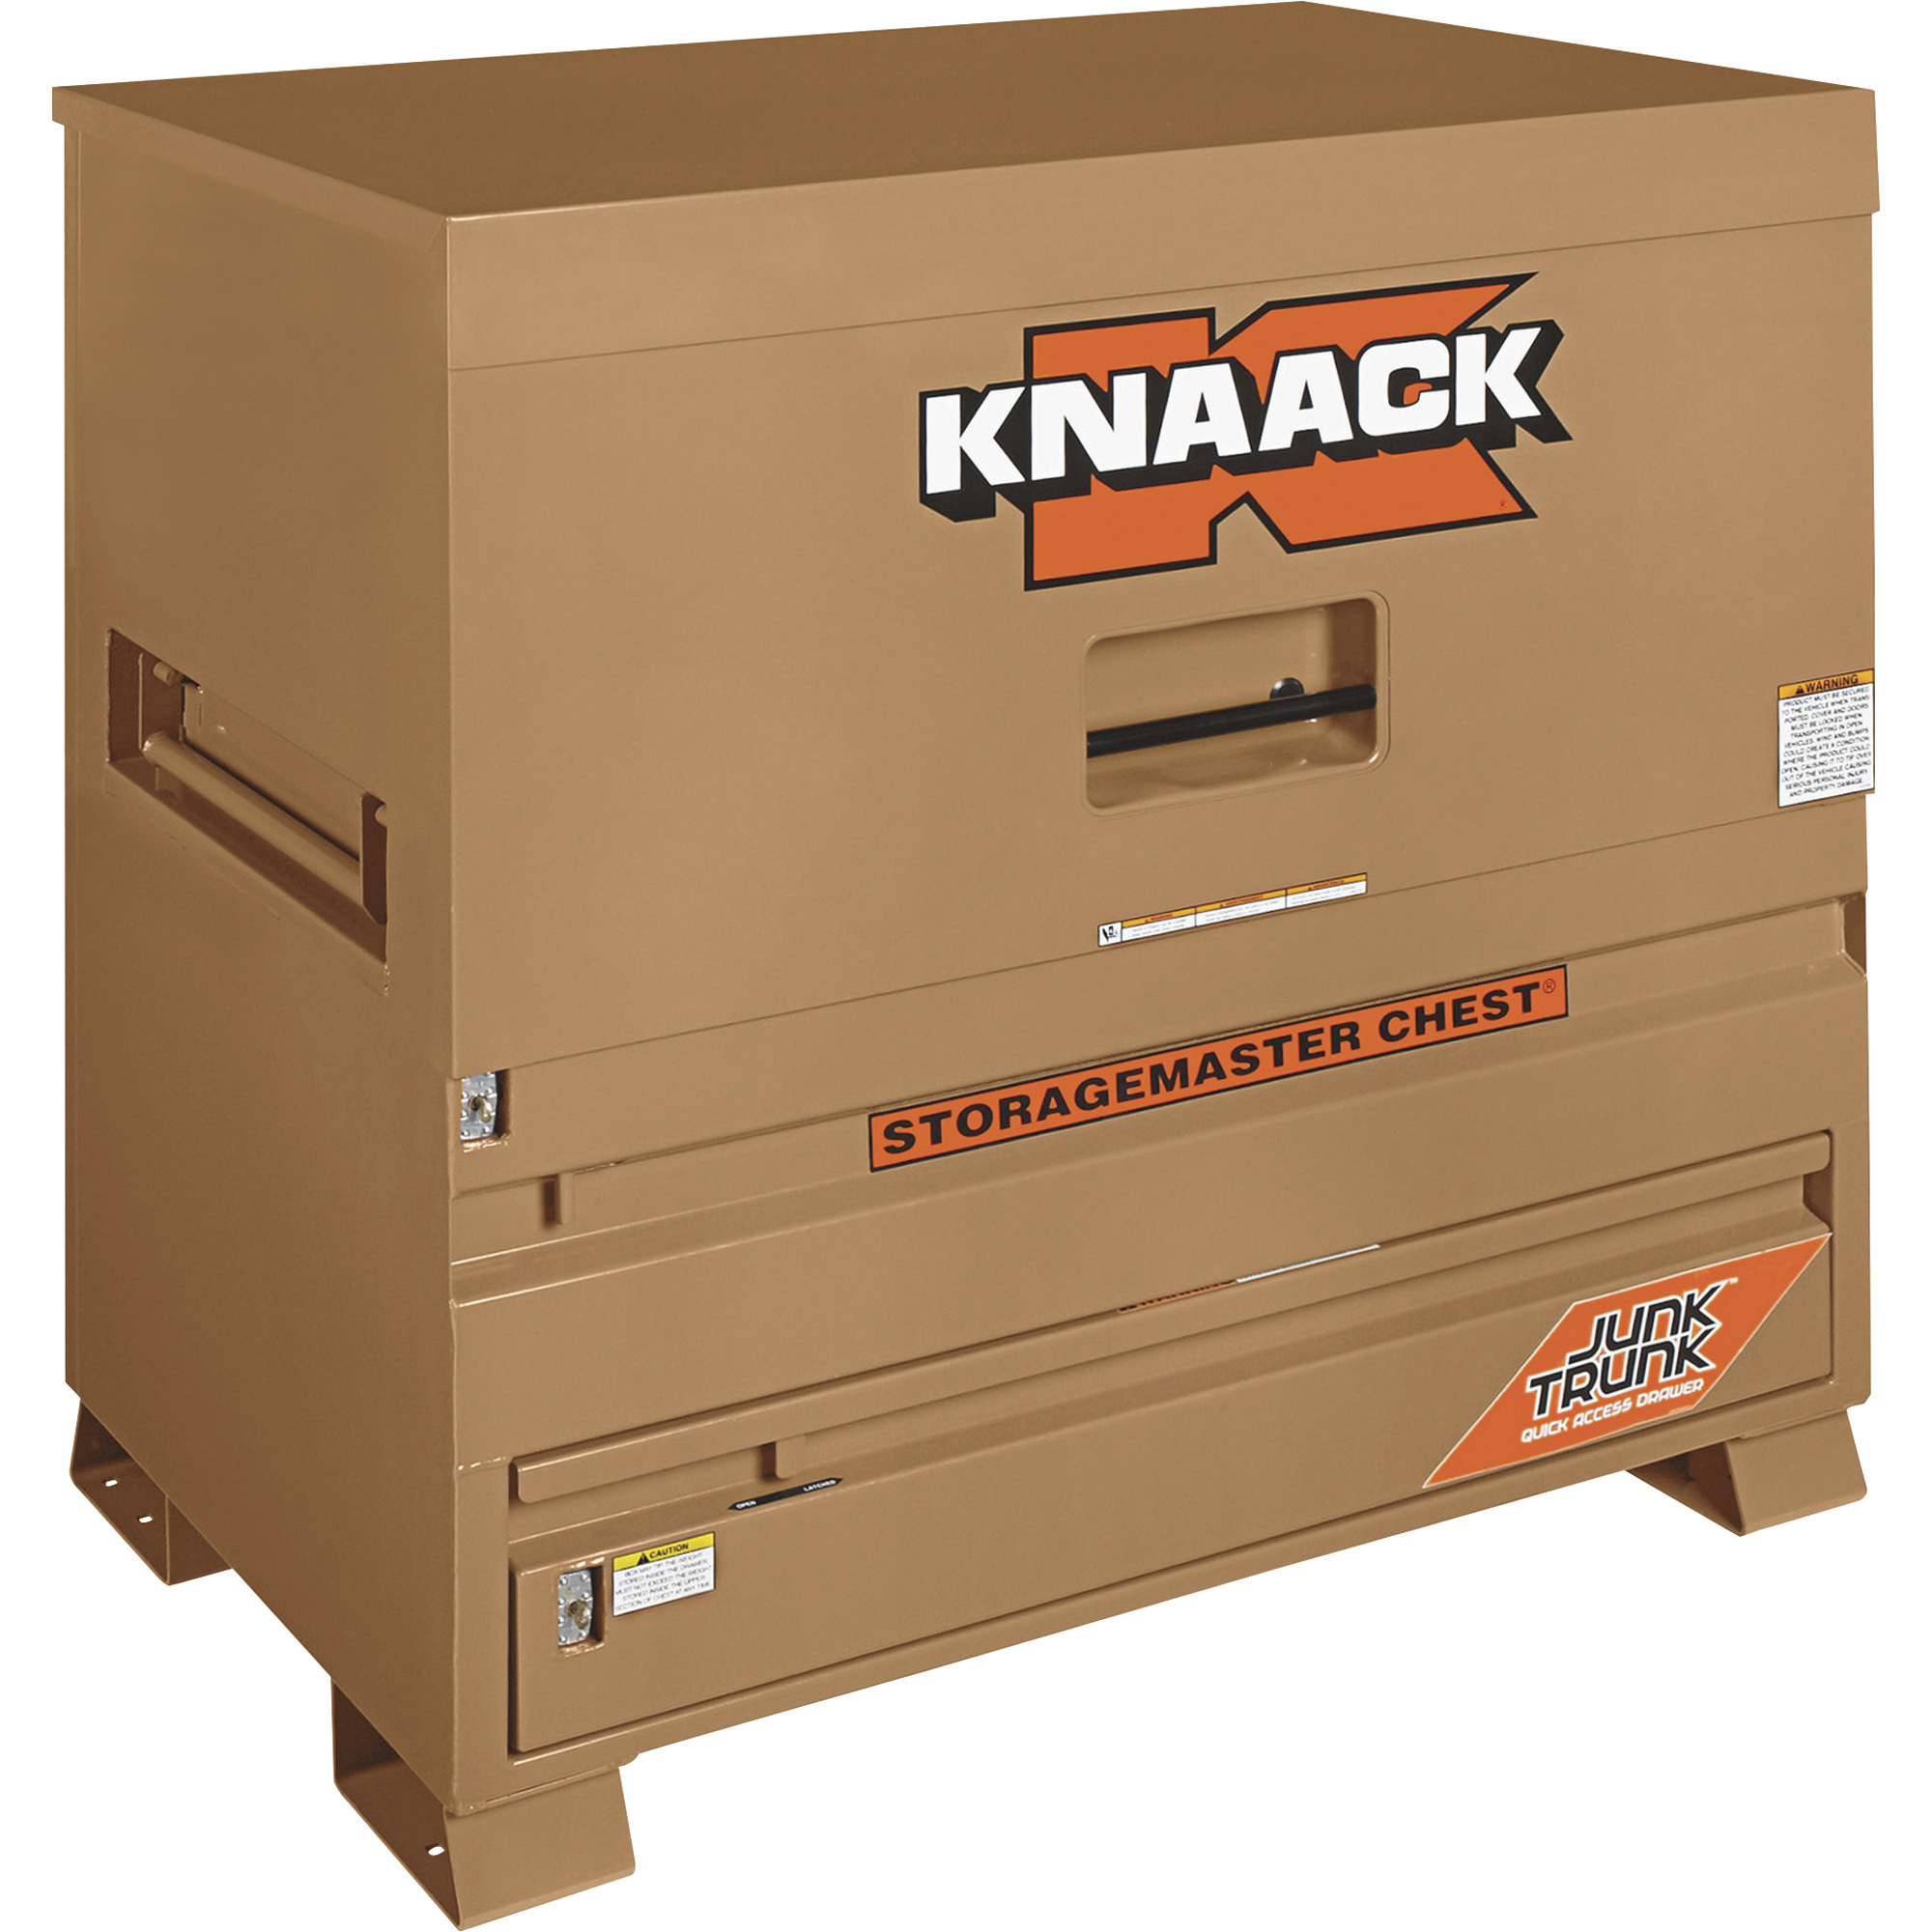 KNAACK Storagemaster Jobsite Piano Box with Junk Trunk, Tan, 36.2 Cu. Ft. Capacity, 49Inch W x 30Inch D x 48Inch H, Model 79-D